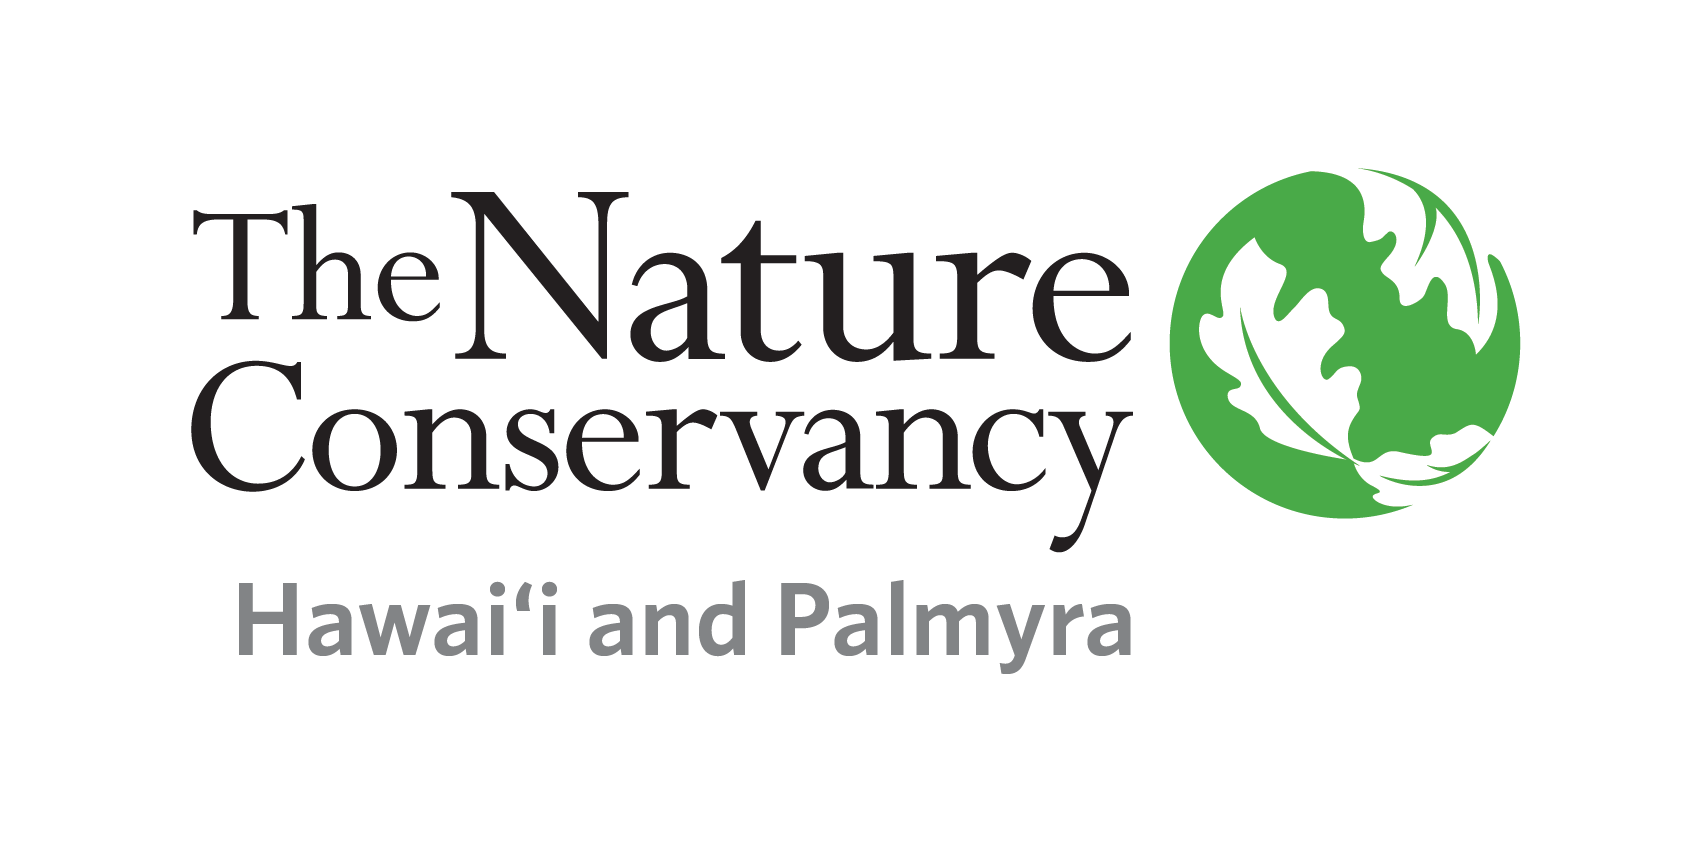 The Nature Conservancy Hawaiʻi and Palmyra